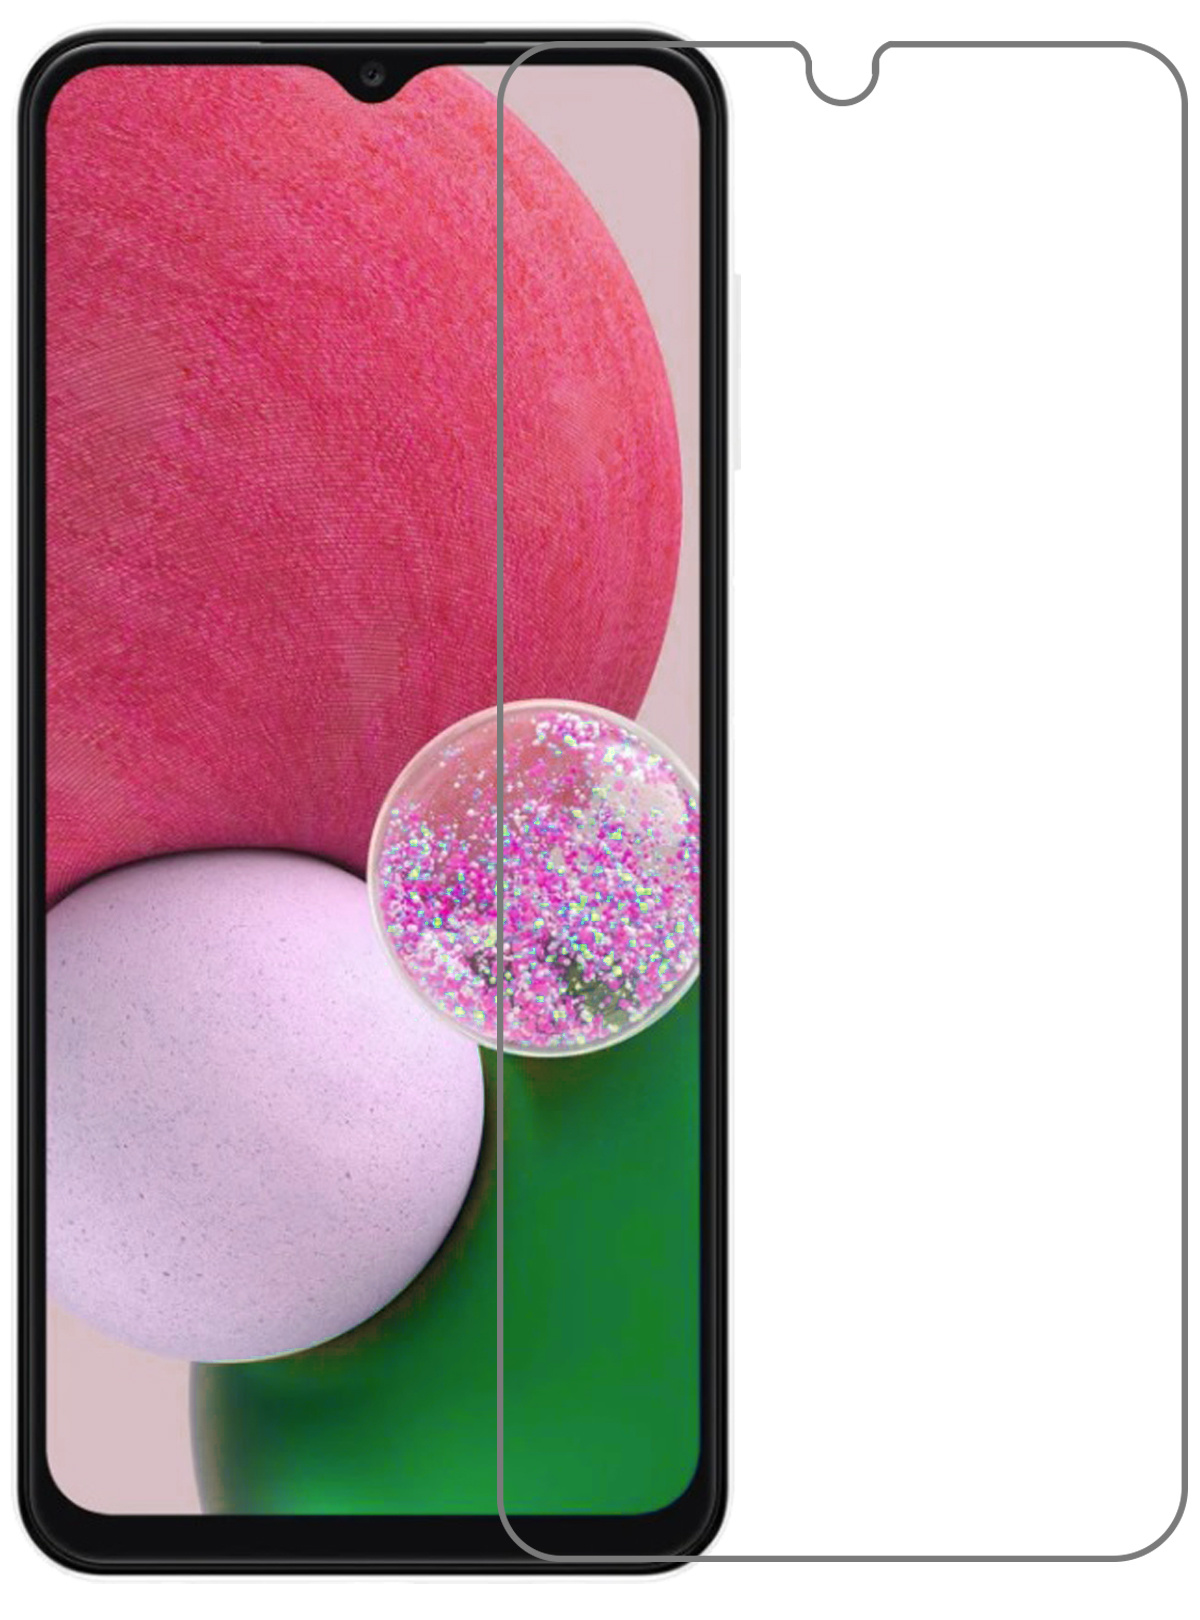 BASEY. Samsung Galaxy A13 4G Screenprotector Tempered Glass - Samsung Galaxy A13 4G Beschermglas - Samsung Galaxy A13 4G Screen Protector